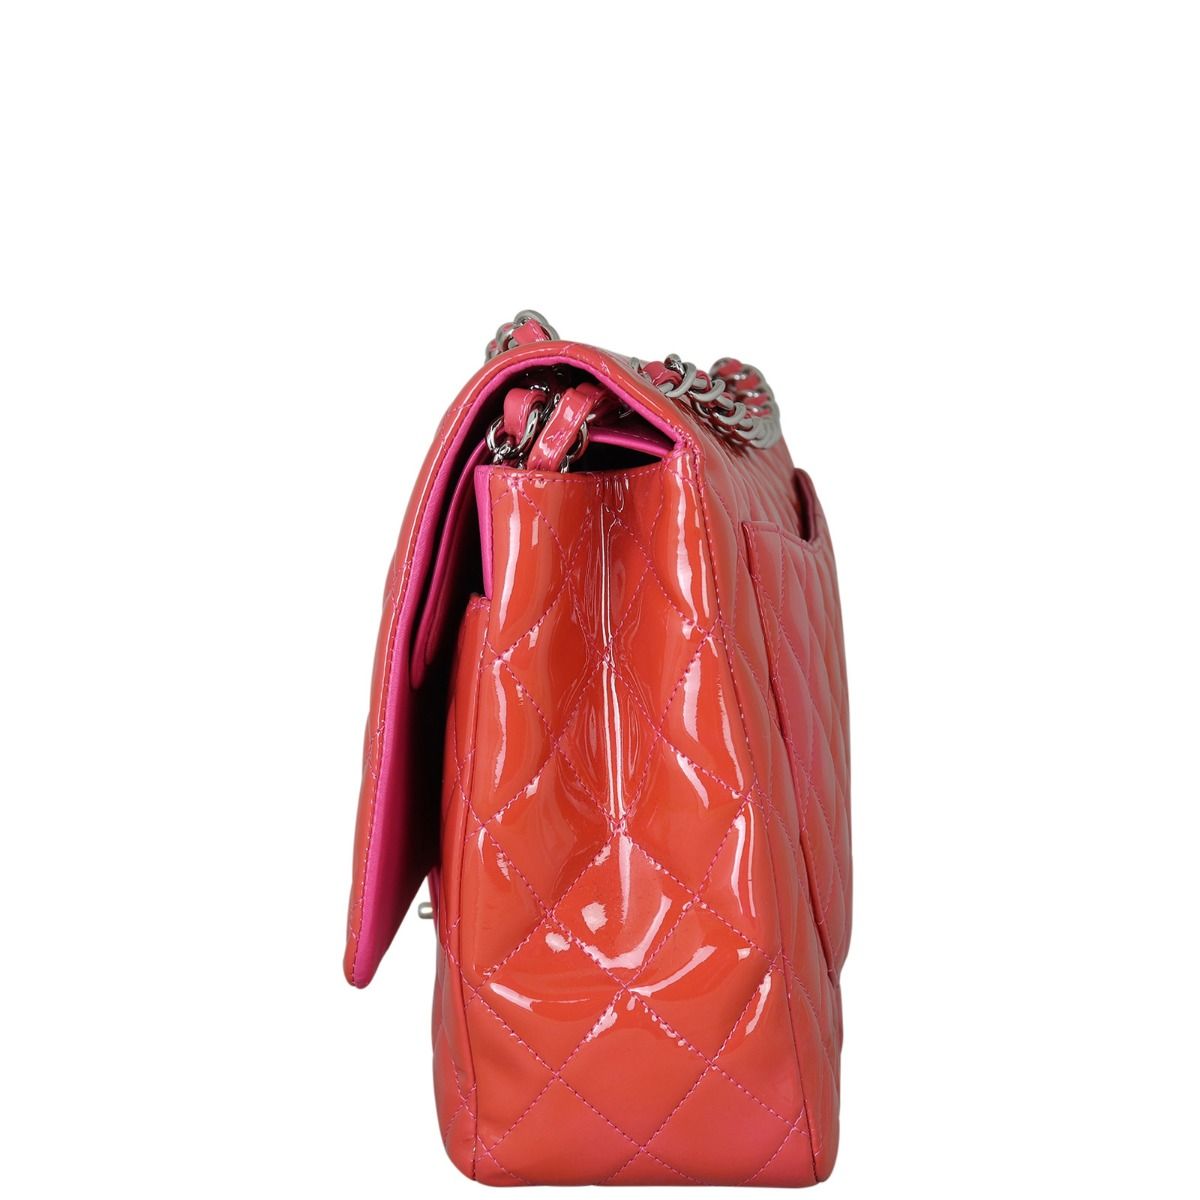 chanel black patent leather purse handbag